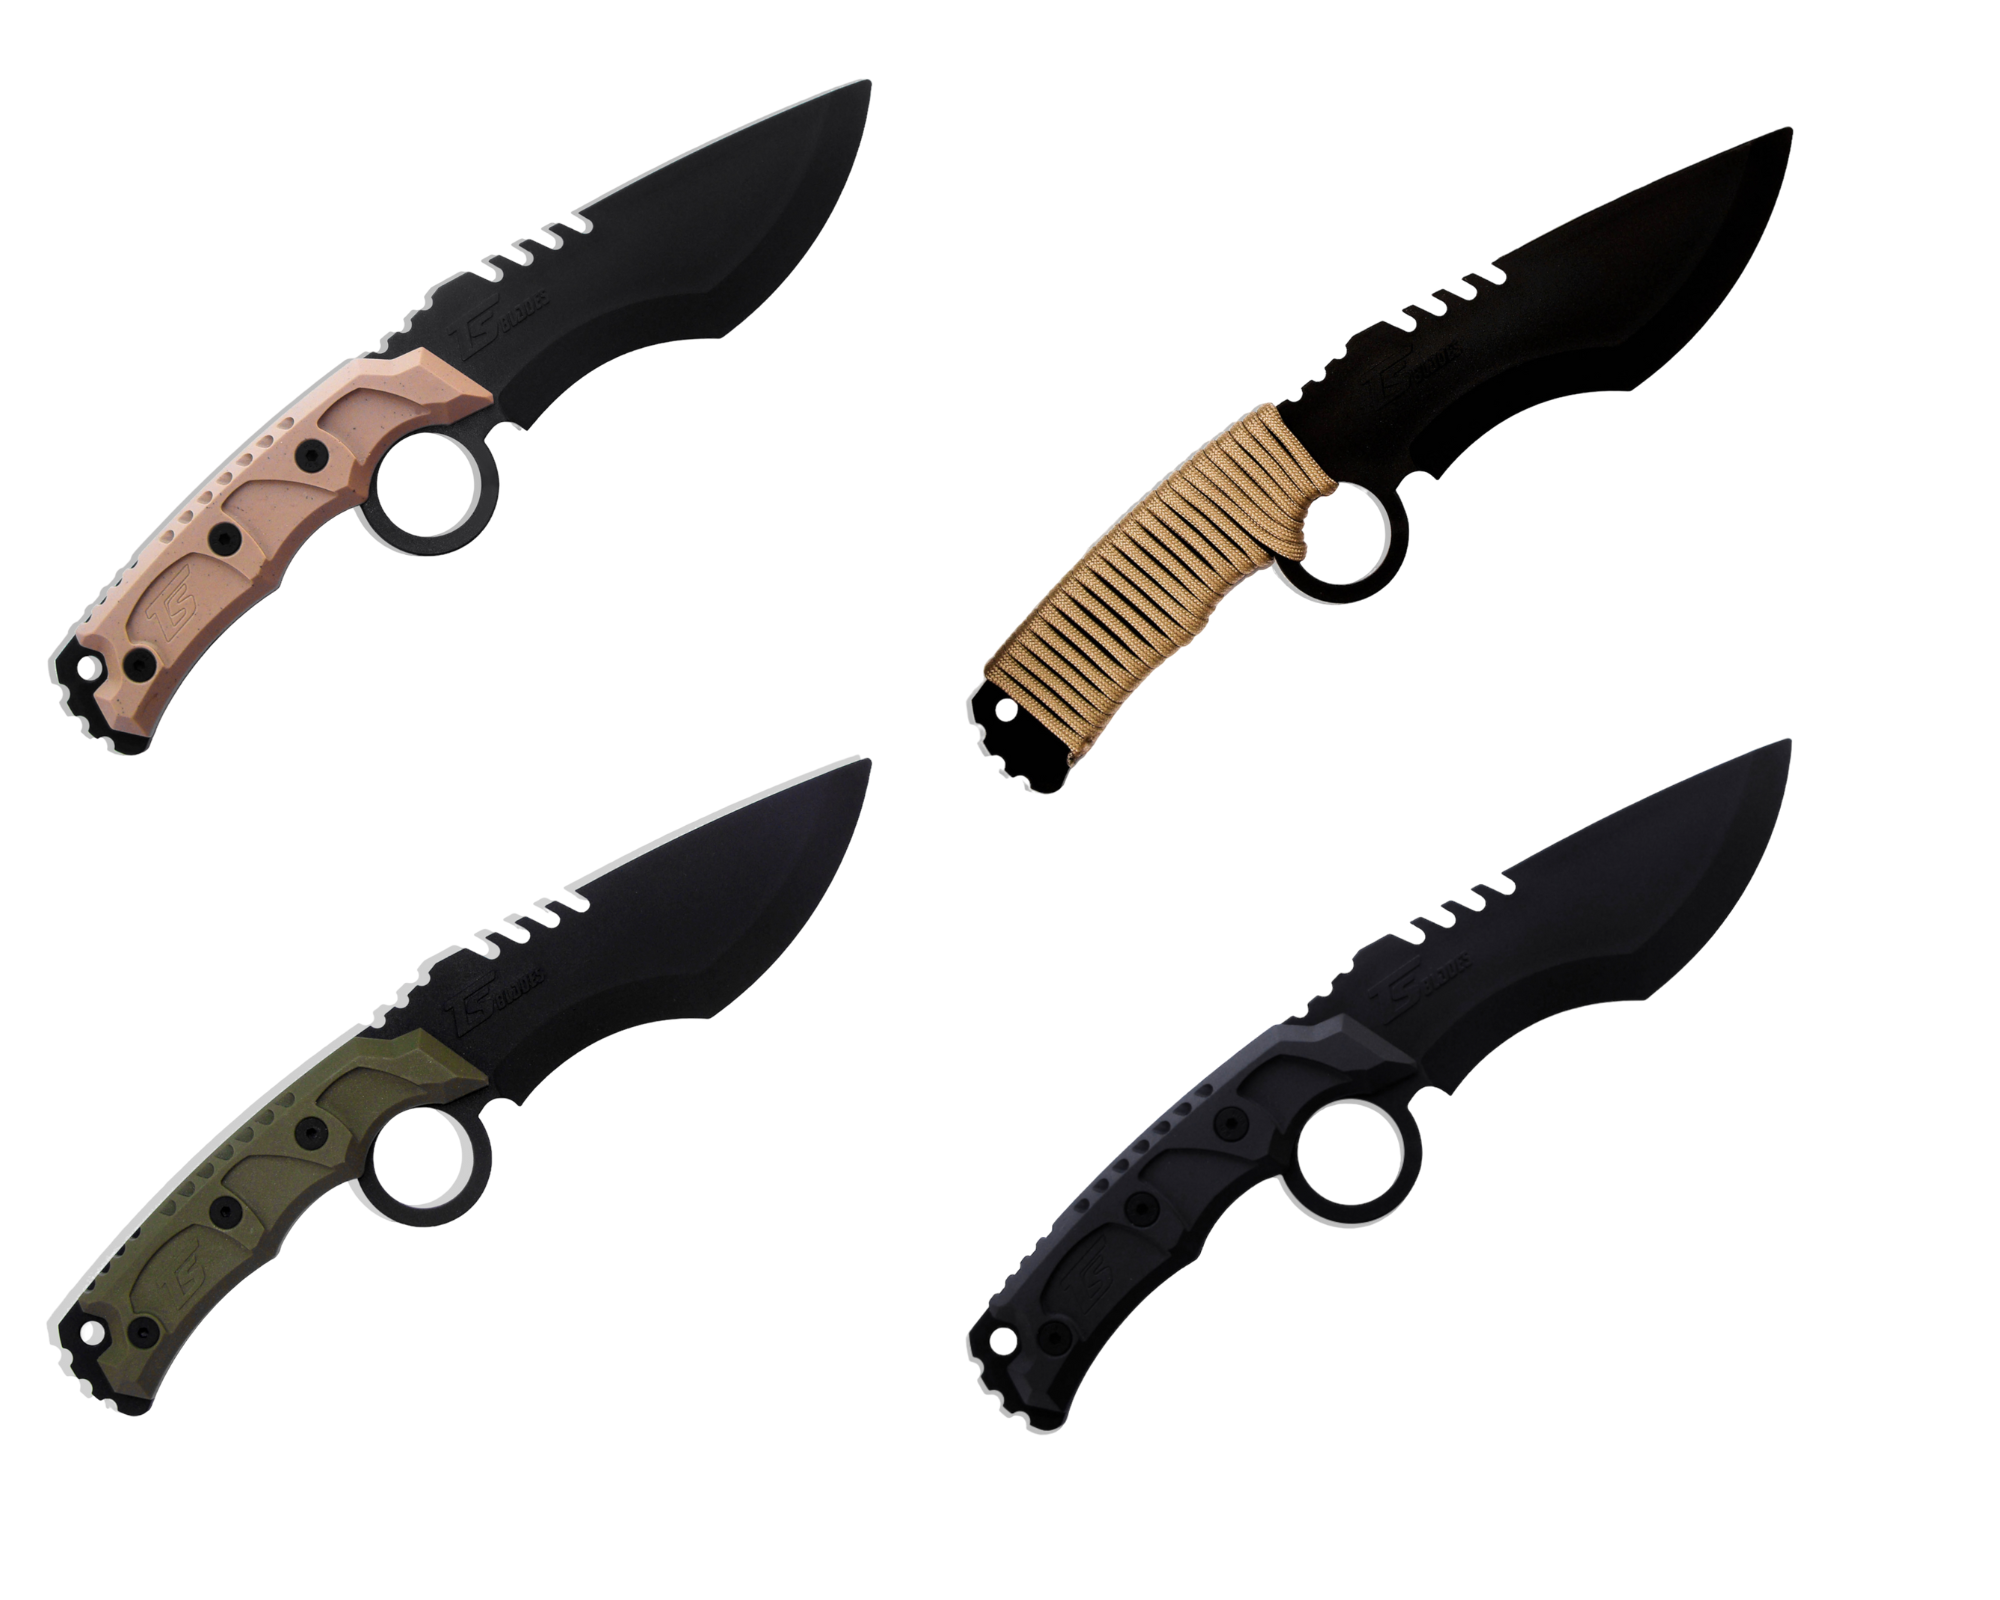 TS Blades El Coronel G3 Training Knife - ssairsoft.com